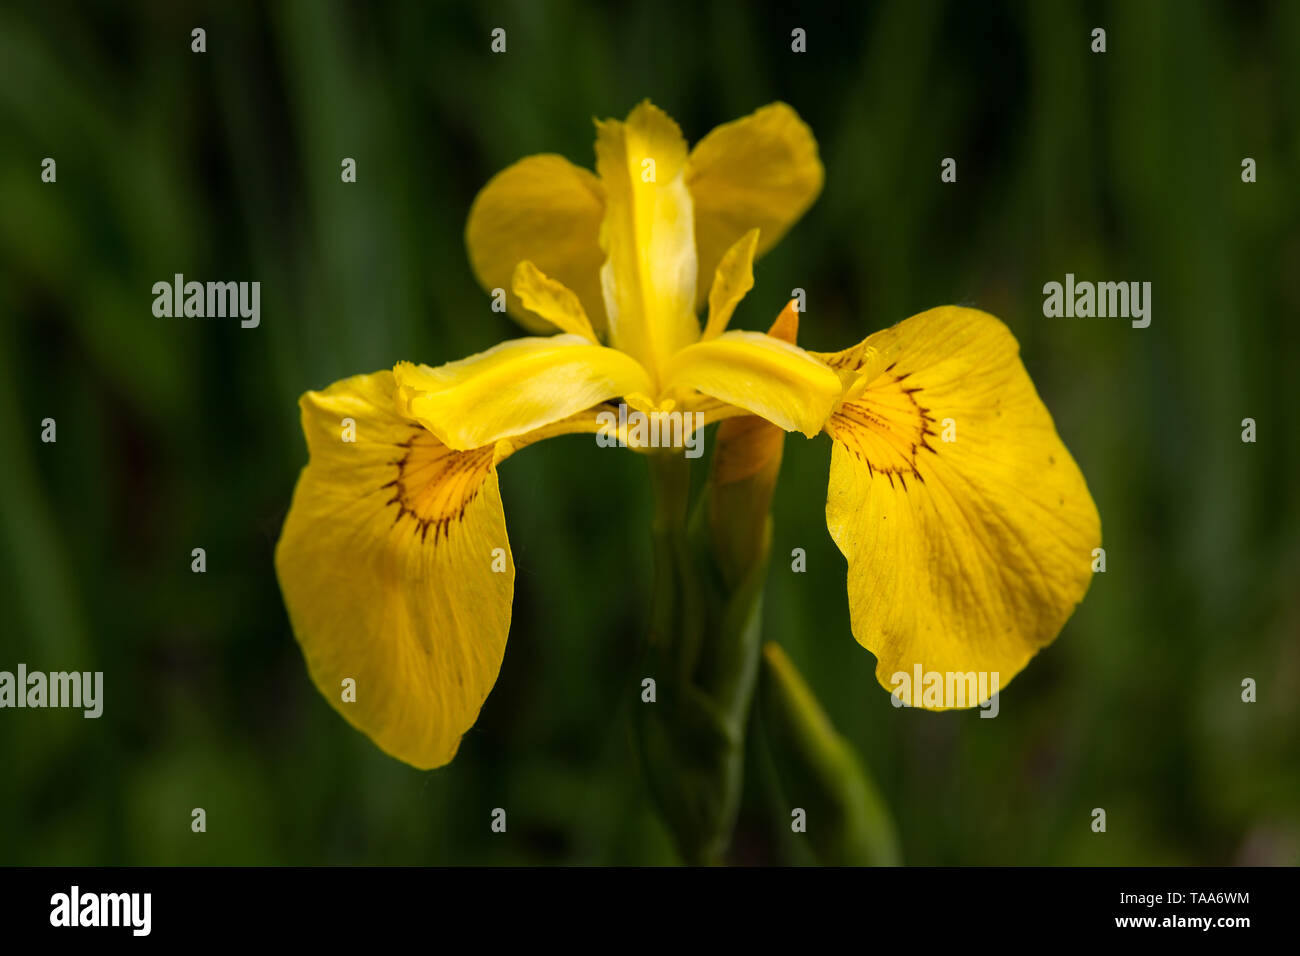 Aquatic iris flower Stock Photo